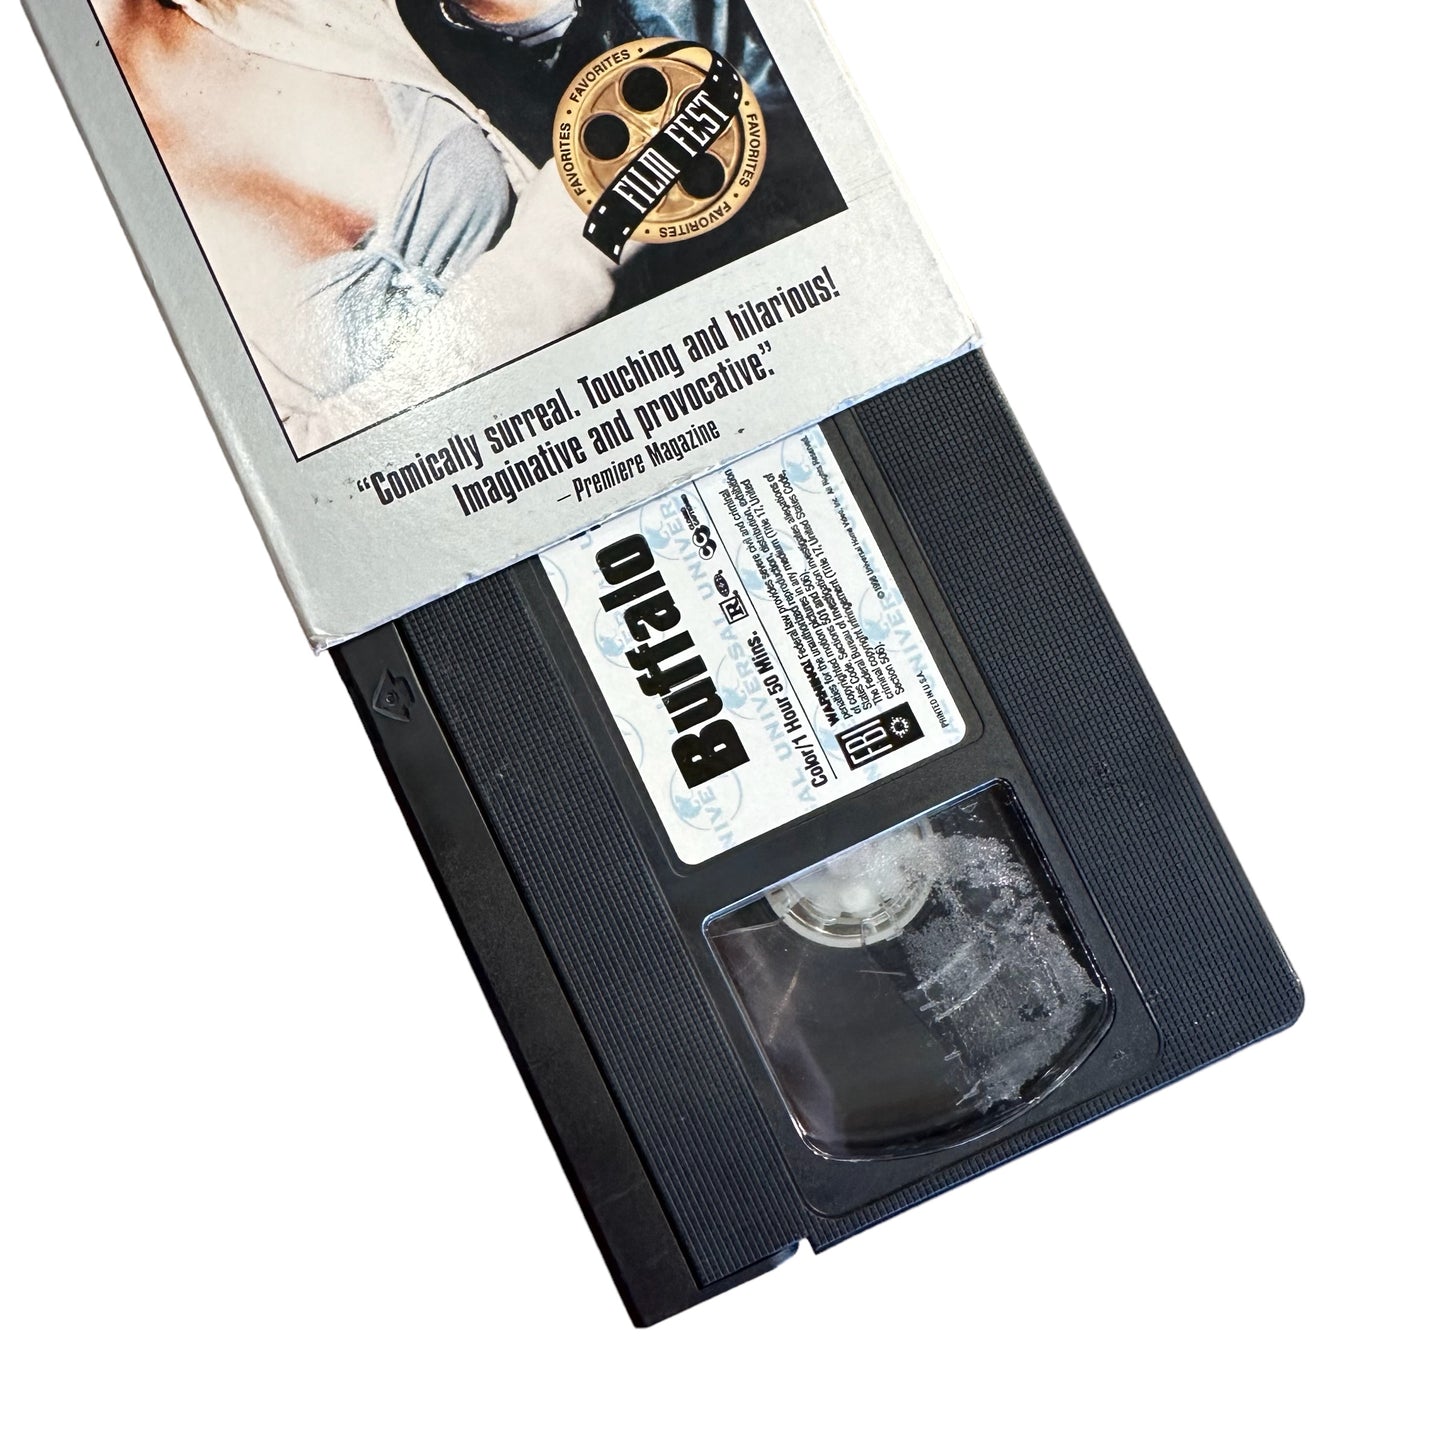 VHS ビデオテープ 輸入版 Buffalo'66 バッファロー66 海外版 USA アメリカ ヴィンテージビデオ 紙ジャケ